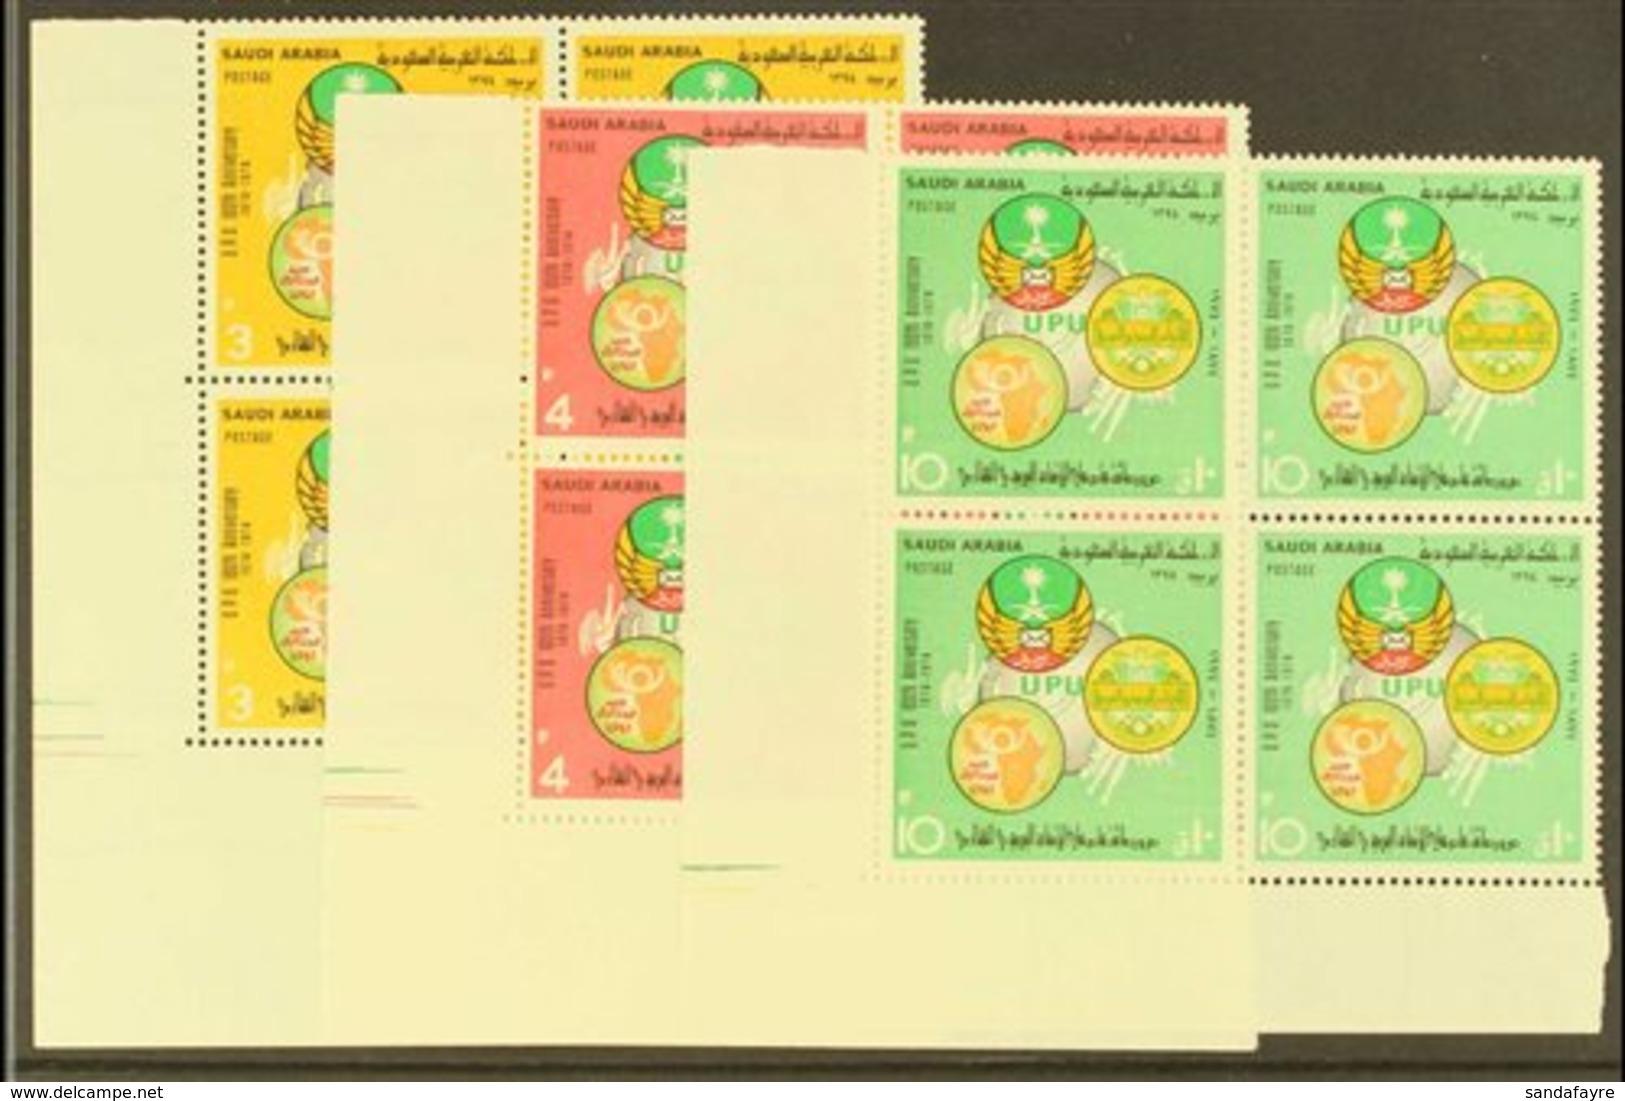 1974 Centenary Of UPU, Set Complete, SG 1073 - 5, In Never Hinged Mint Corner Blocks Of 4. (12 Stamps) For More Images,  - Saudi-Arabien